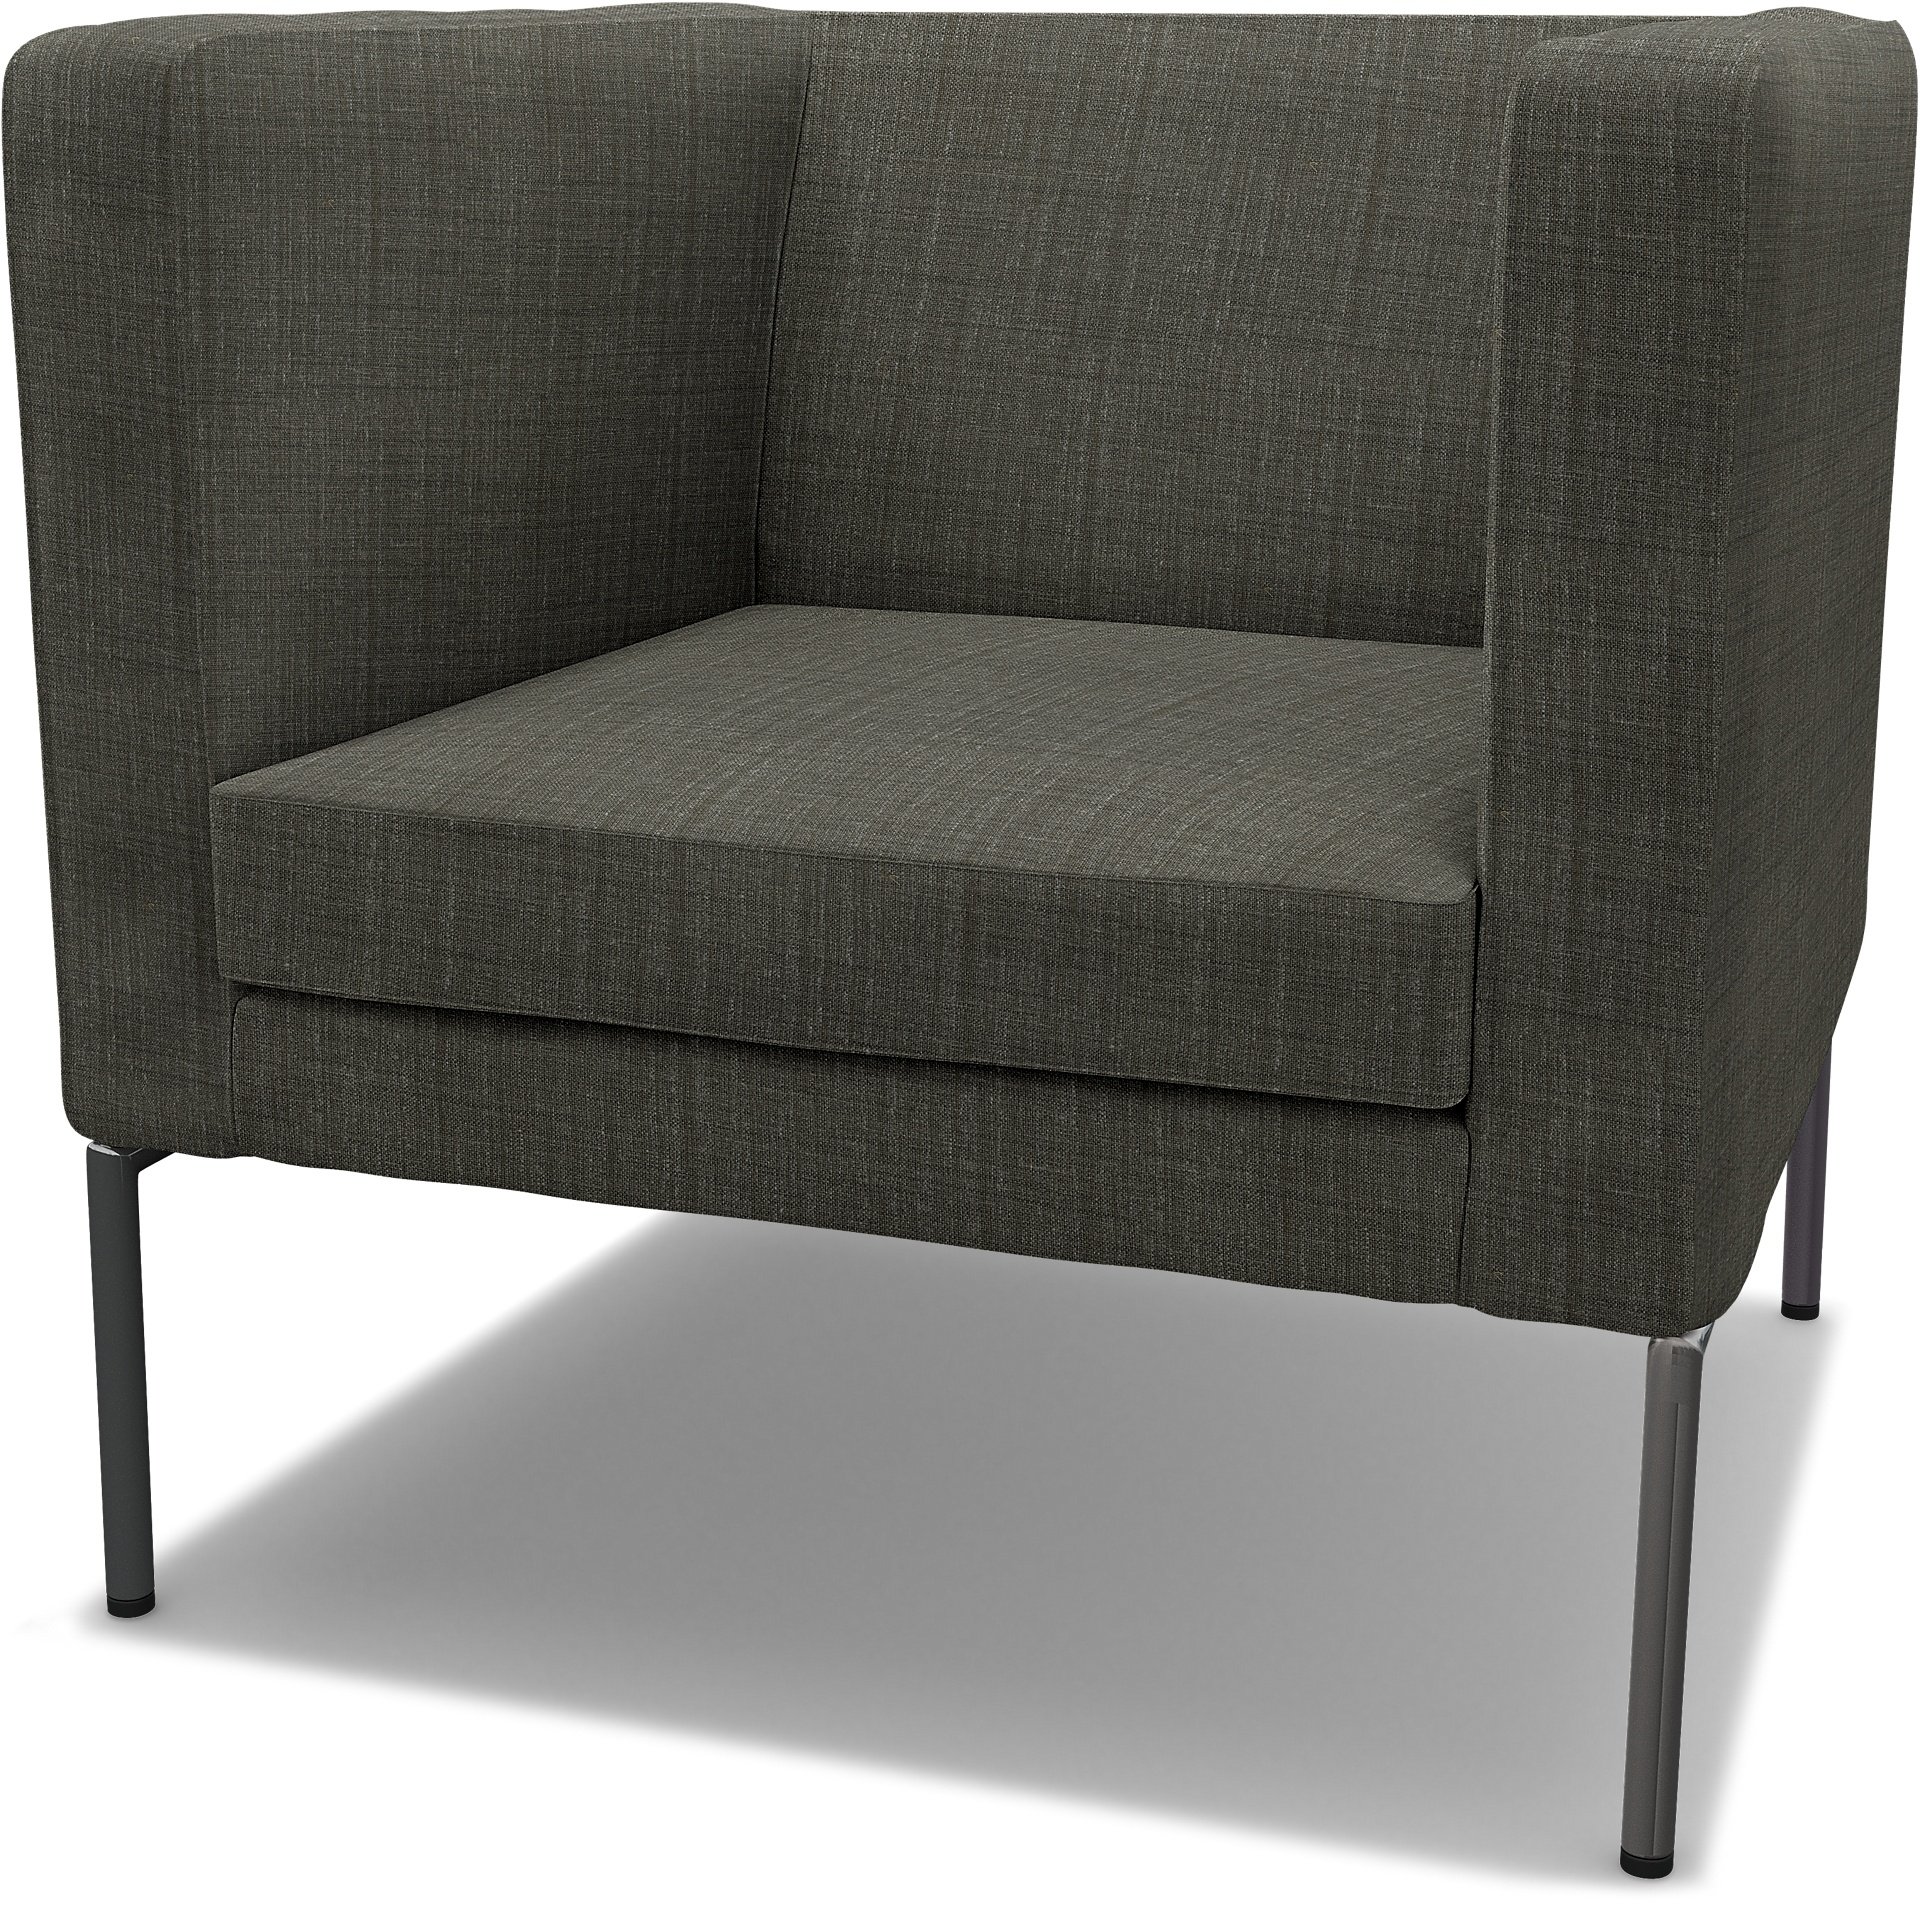 IKEA - Klappsta Armchair Cover, Mole Brown, Boucle & Texture - Bemz